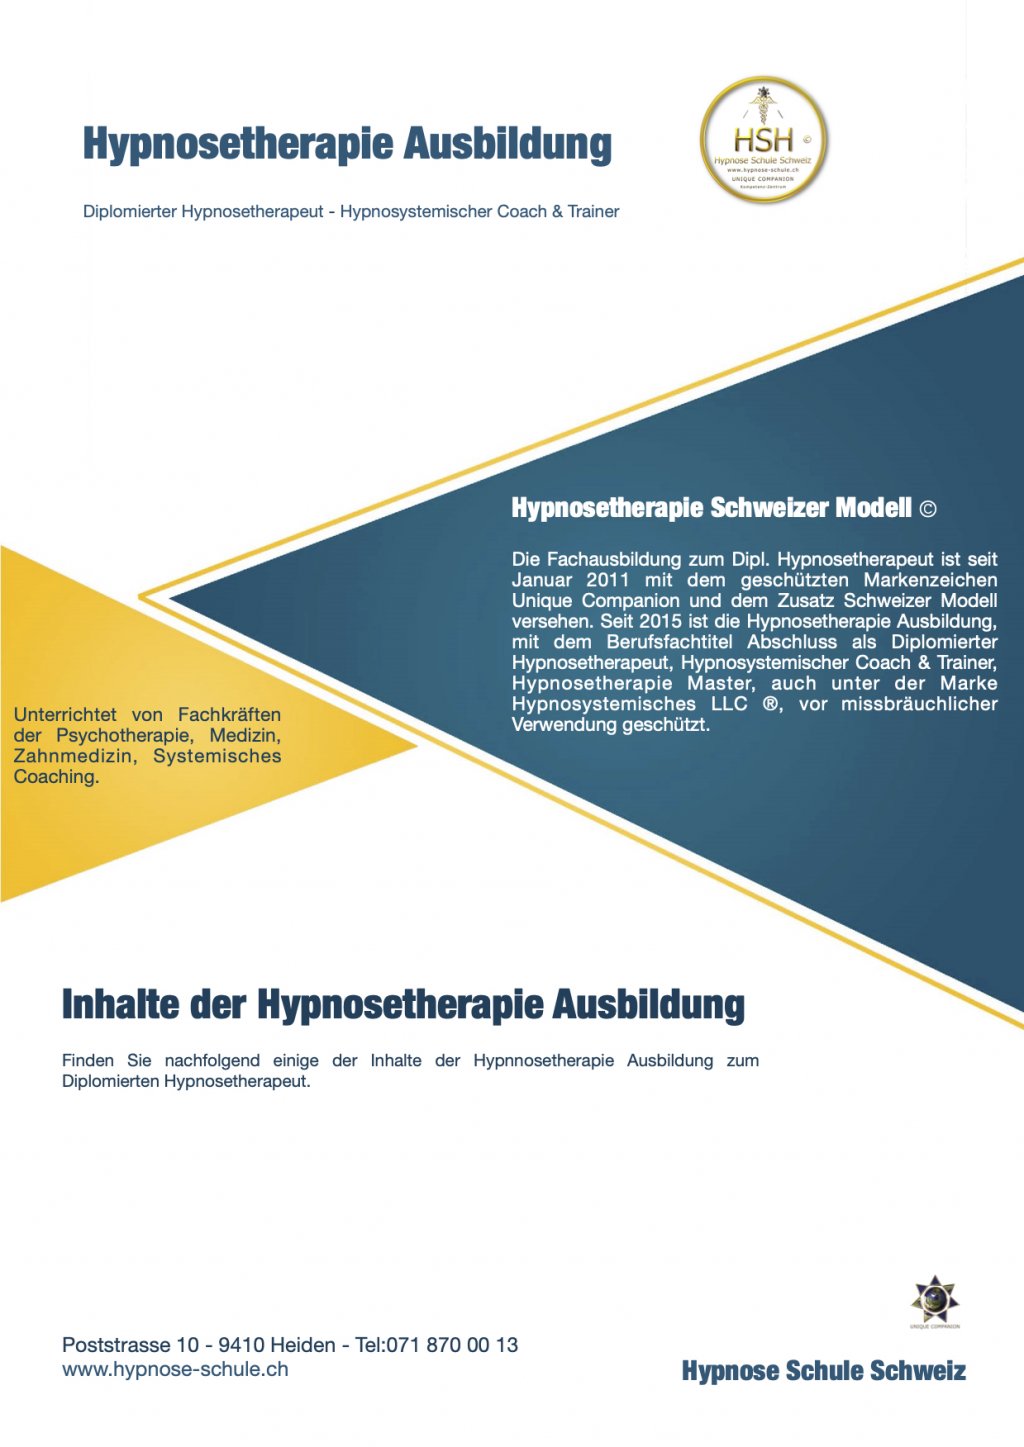 image-11471024-Hypnosetherapie_Ausbildung_Lernen_Hypnosetherapeut-e4da3.w640.jpg